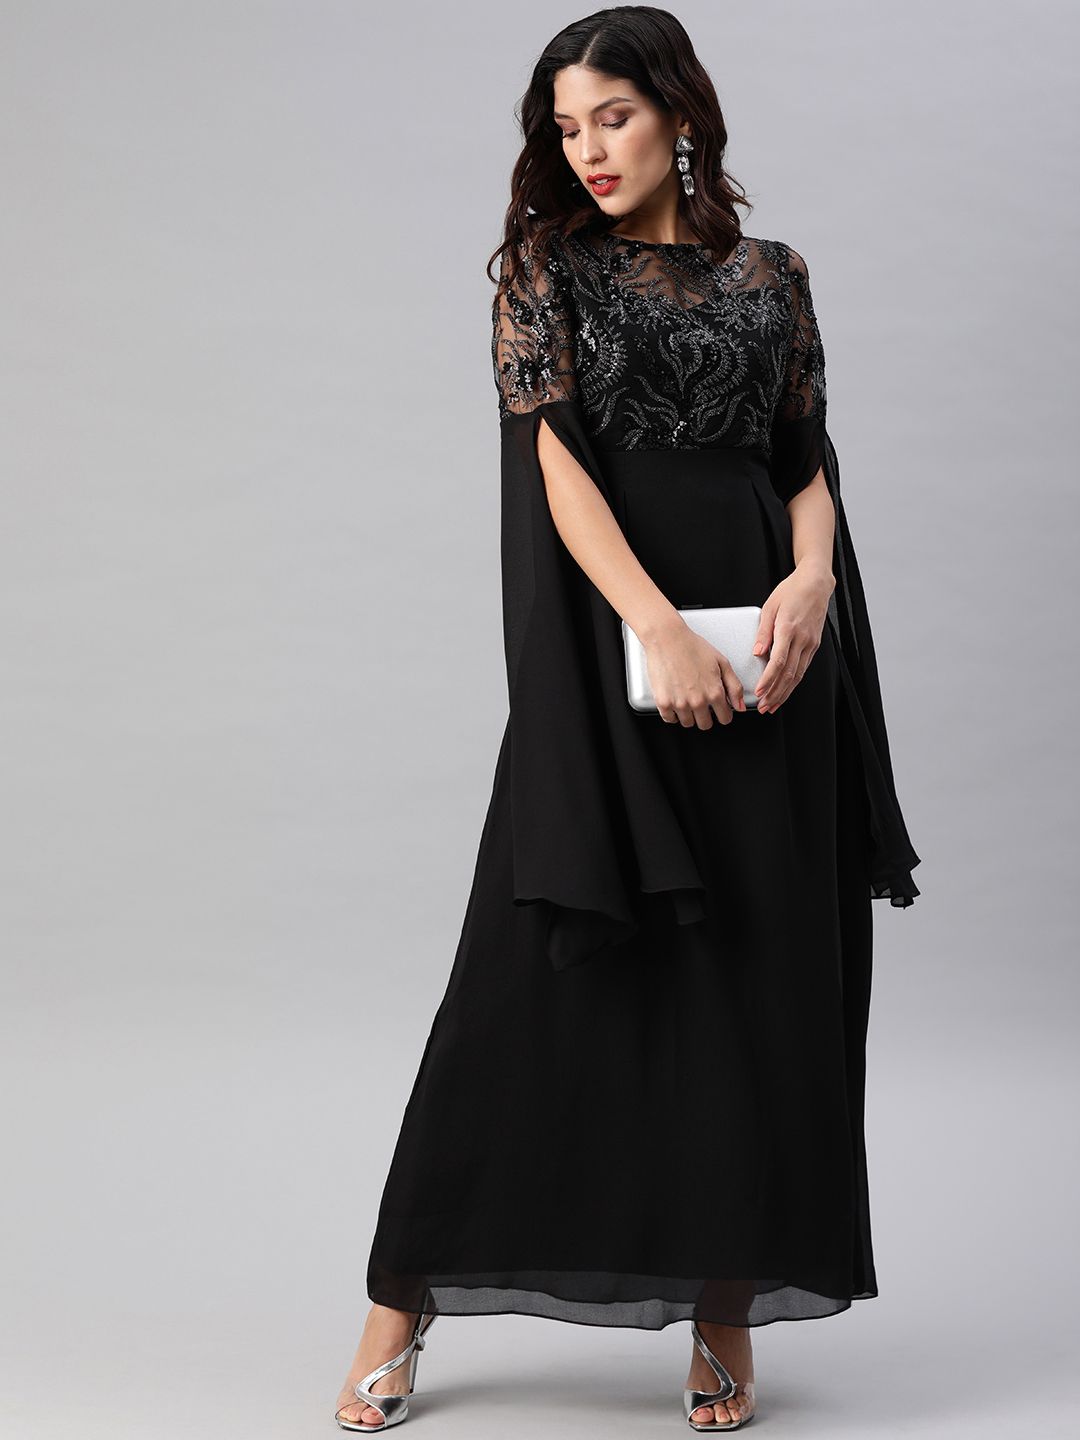 Athena Black Embellished Slit Sleeves Maxi Dress Price in India